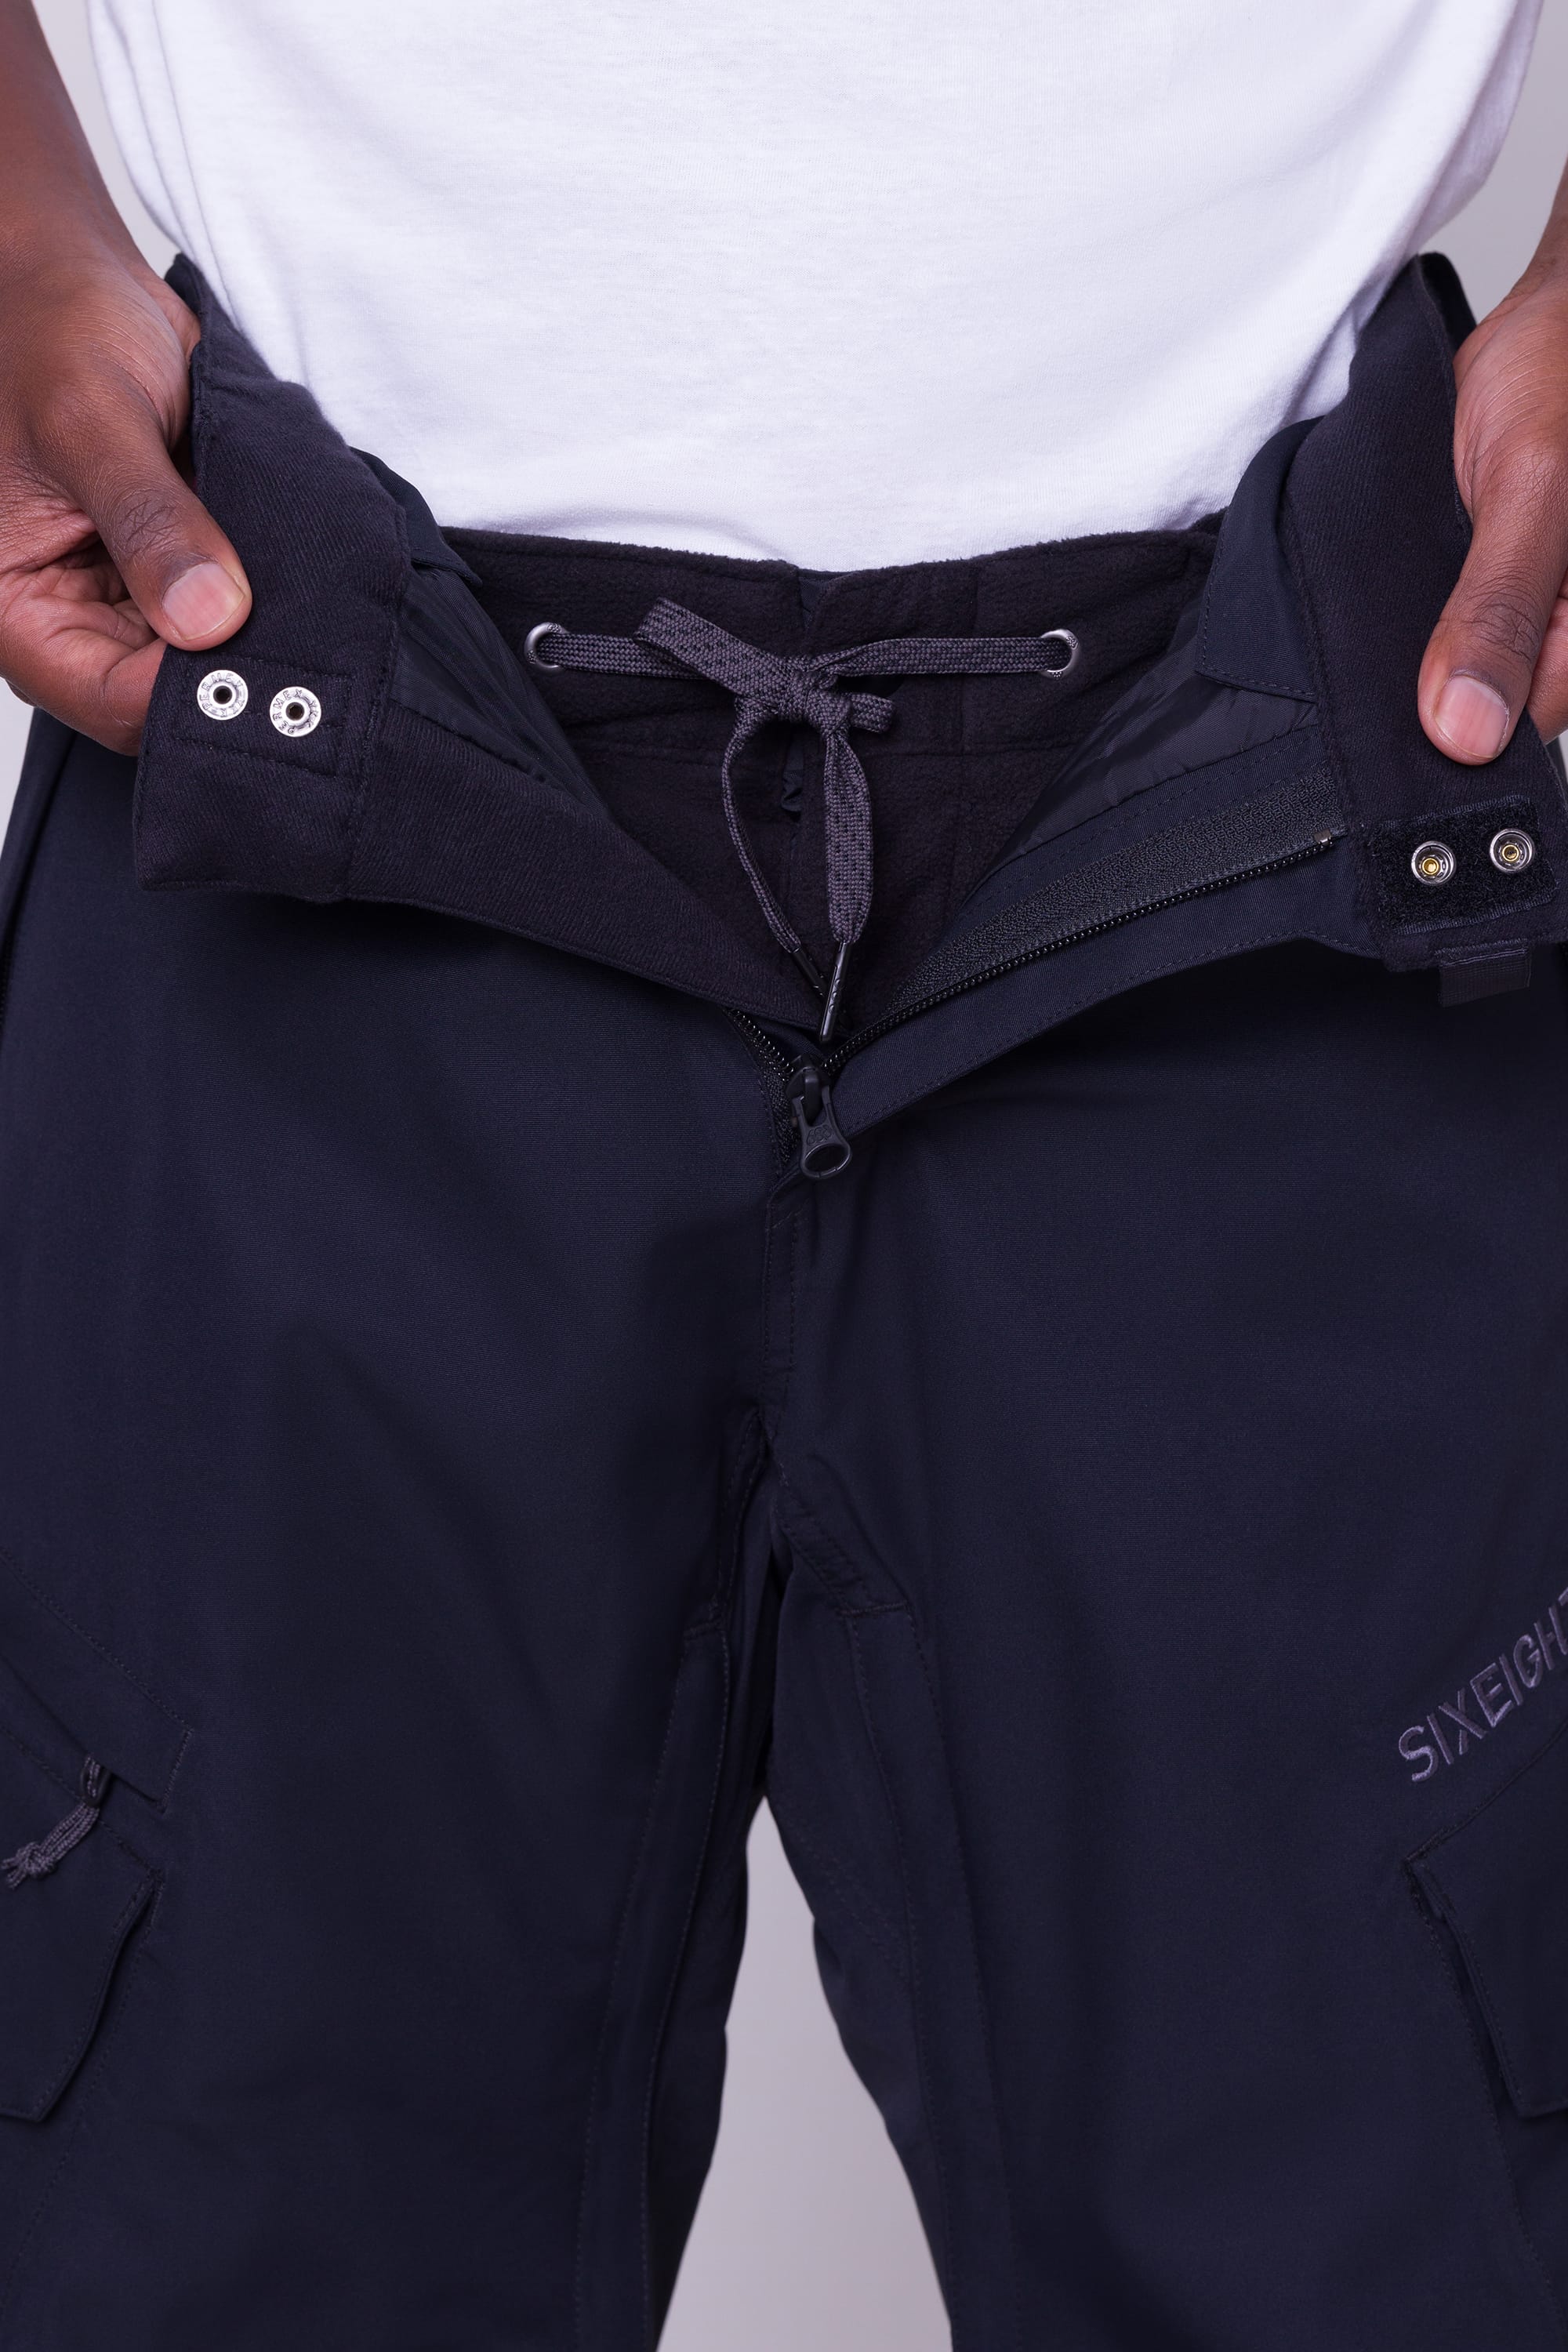 Buy t-base men's Black Cotton Solid Cargo Pant for Men online India